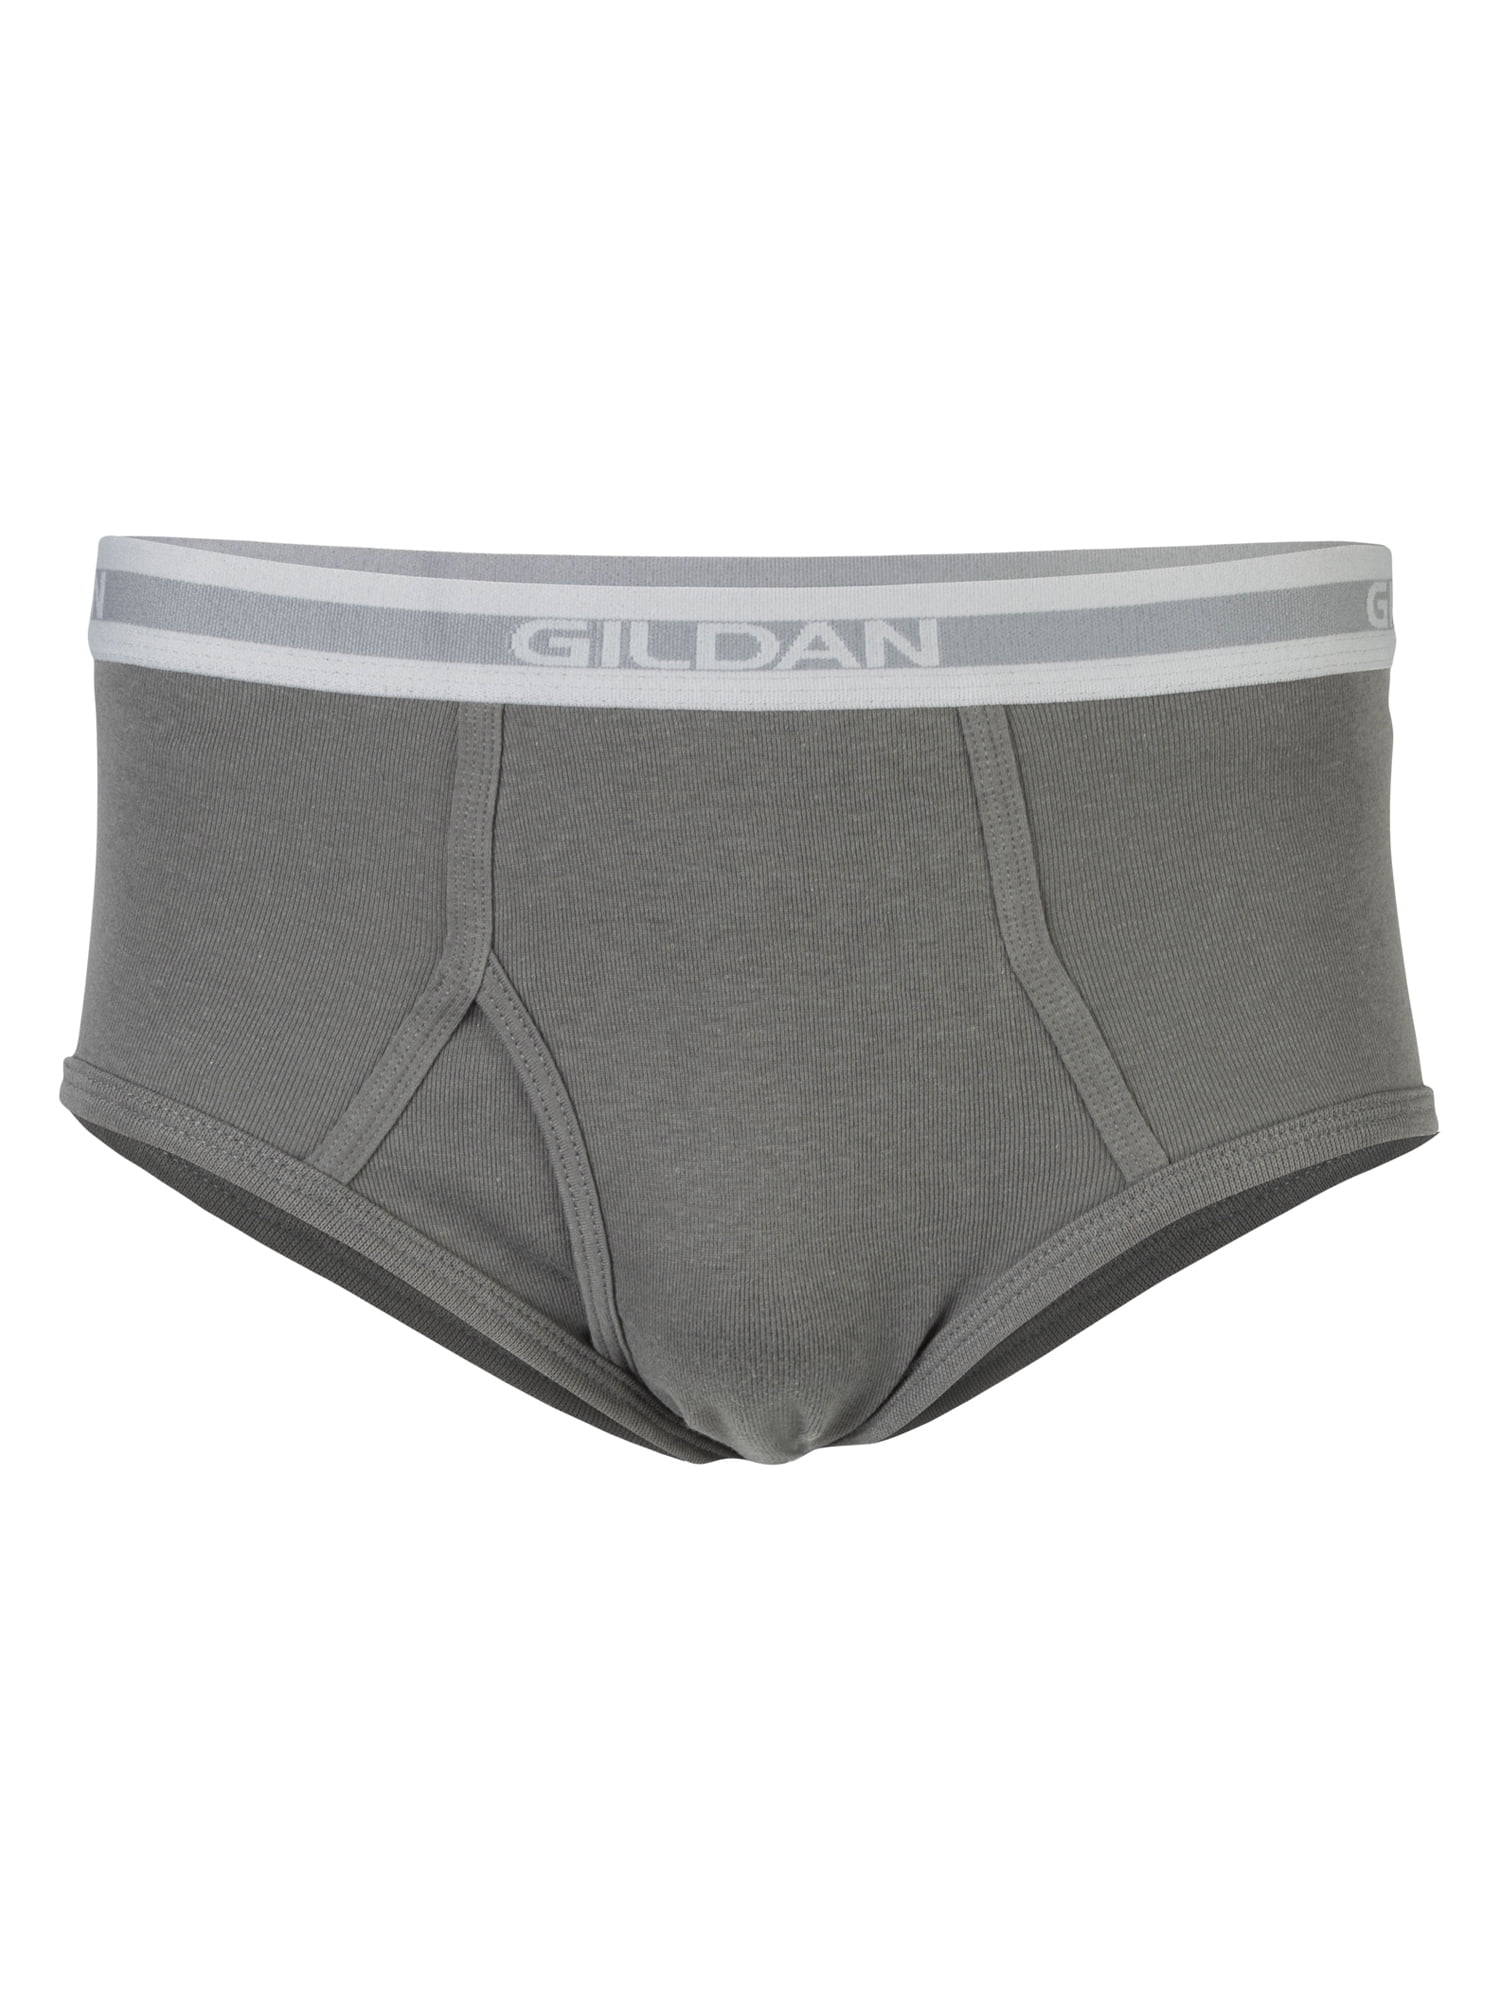 Gildan, Underwear & Socks, New Gildan Briefs 6 Pair Premium  Moisturewicking Colored Briefs Size 2xl